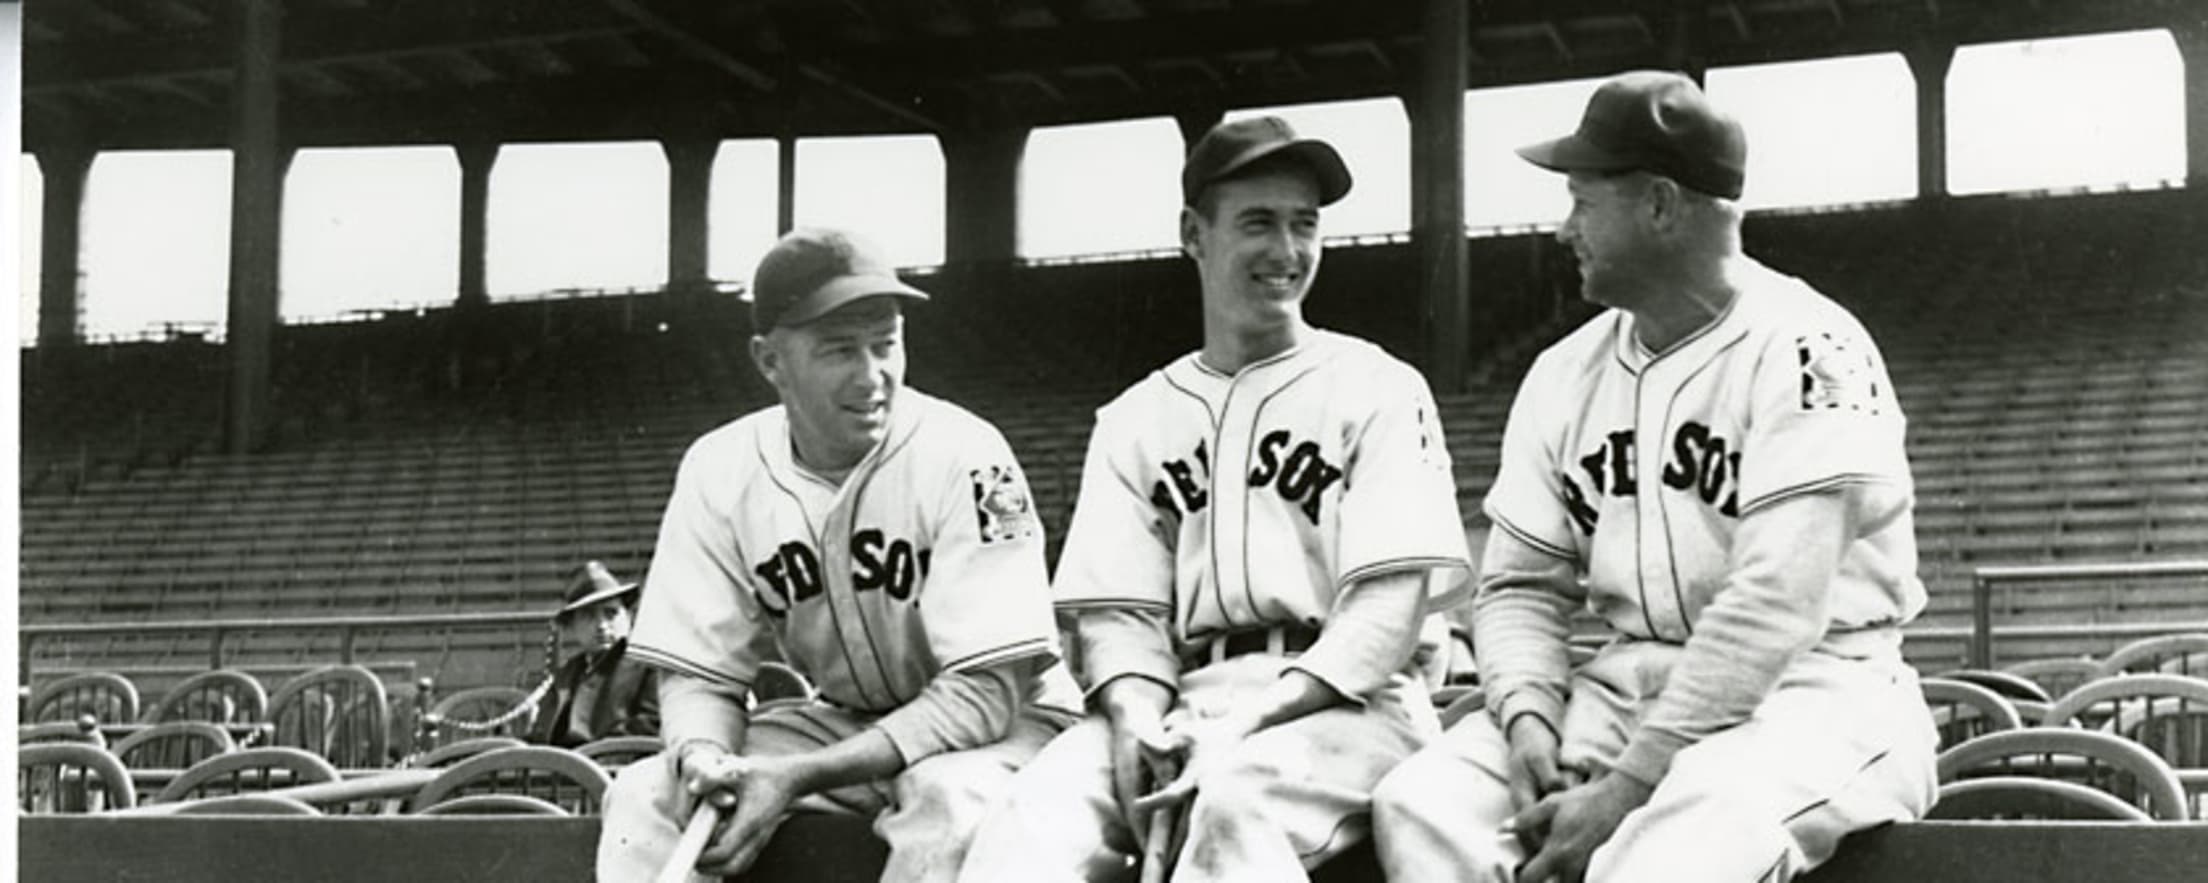 1946 Bobby Doerr, Boston Red Sox, Original Type 1 Photo Measuring 8 x 10